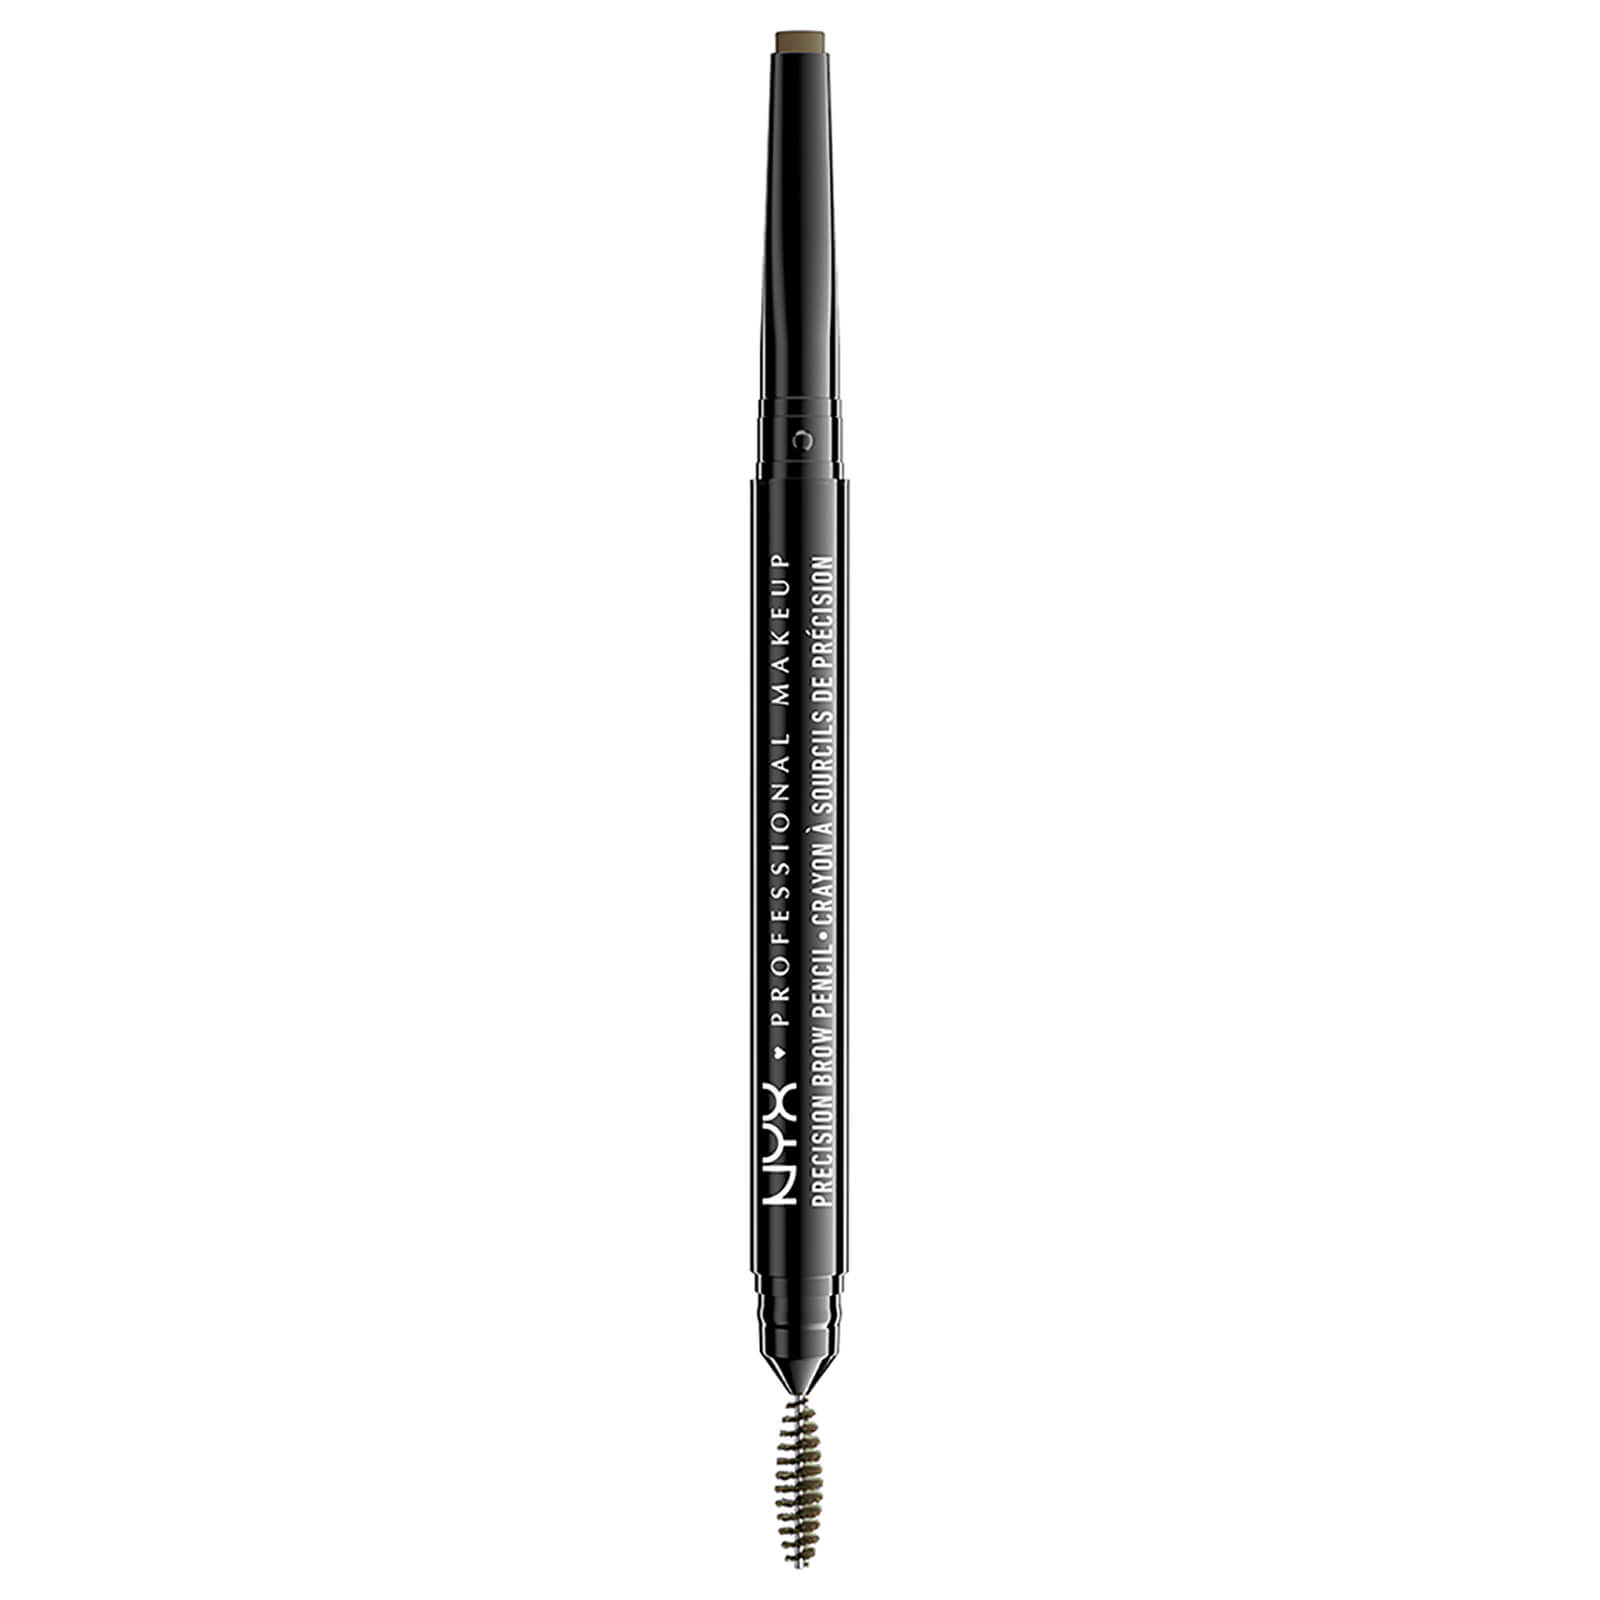 NYX Professional Makeup Precision Brow Pencil 9.3g (Various Shades) - Taupe